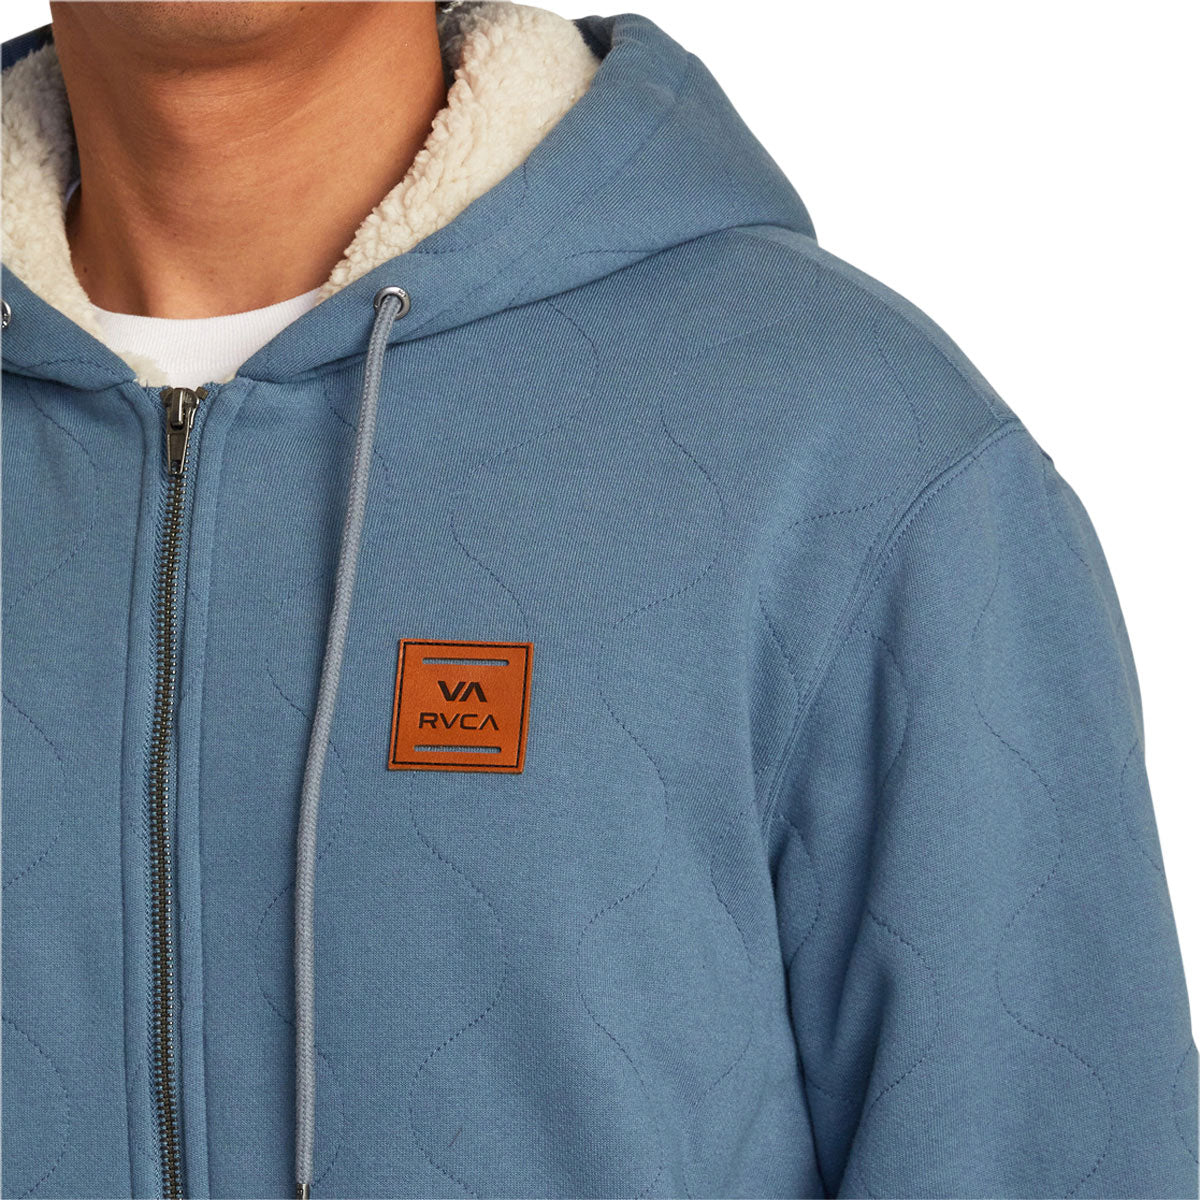 RVCA Arrow Fleece Jacket - Industrial Blue image 3